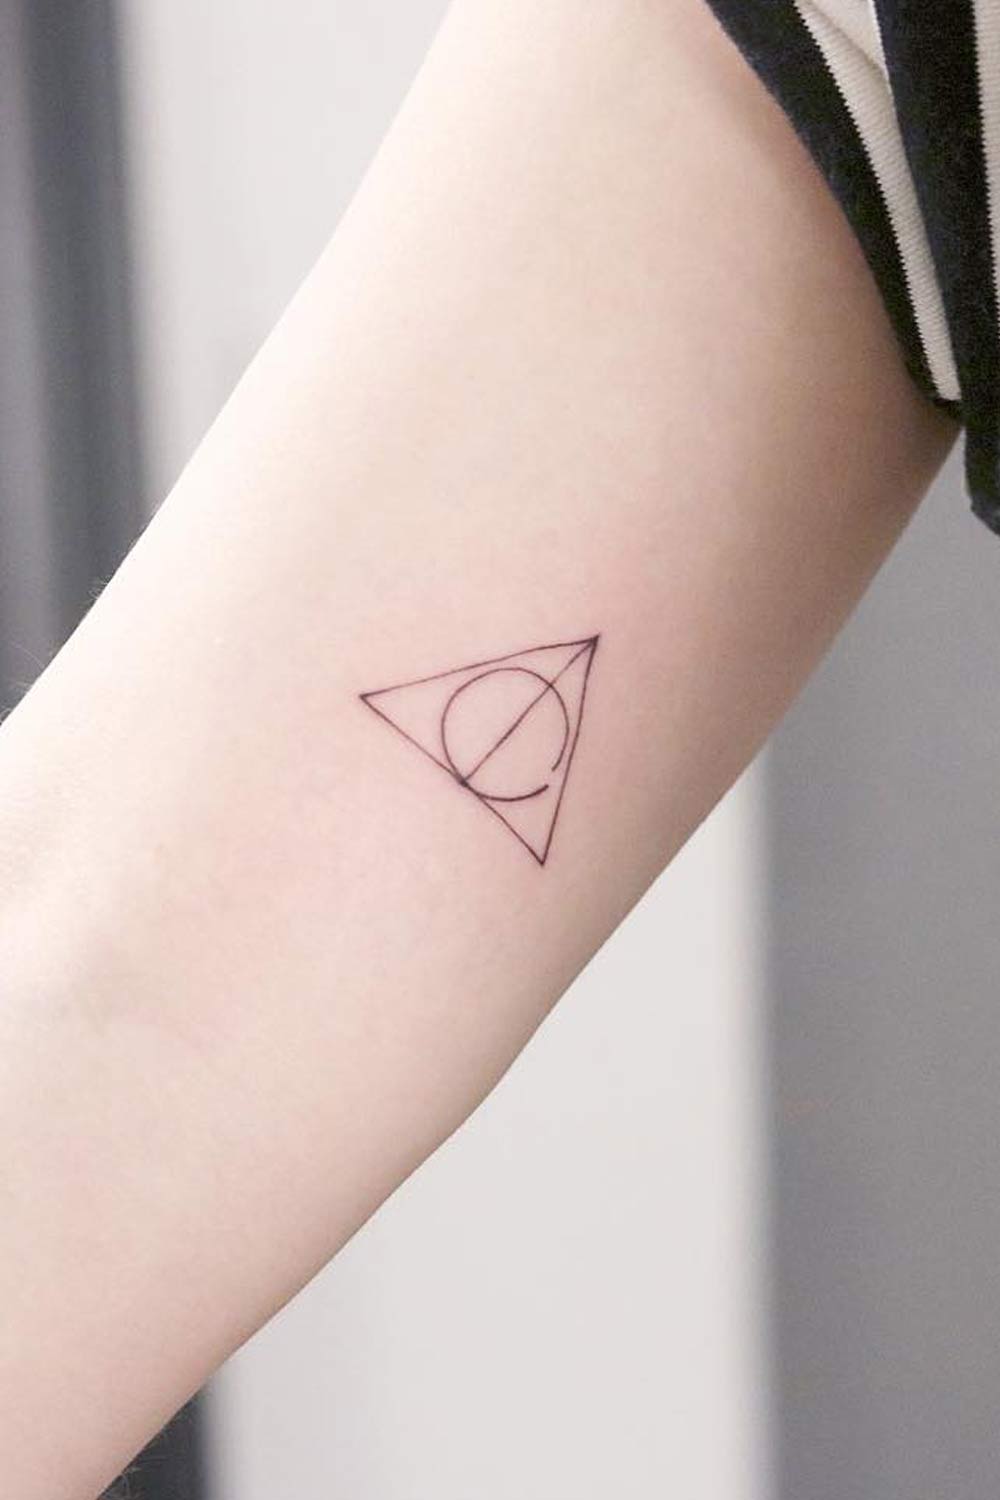 The Deathly Hallows Symbol Tattoo